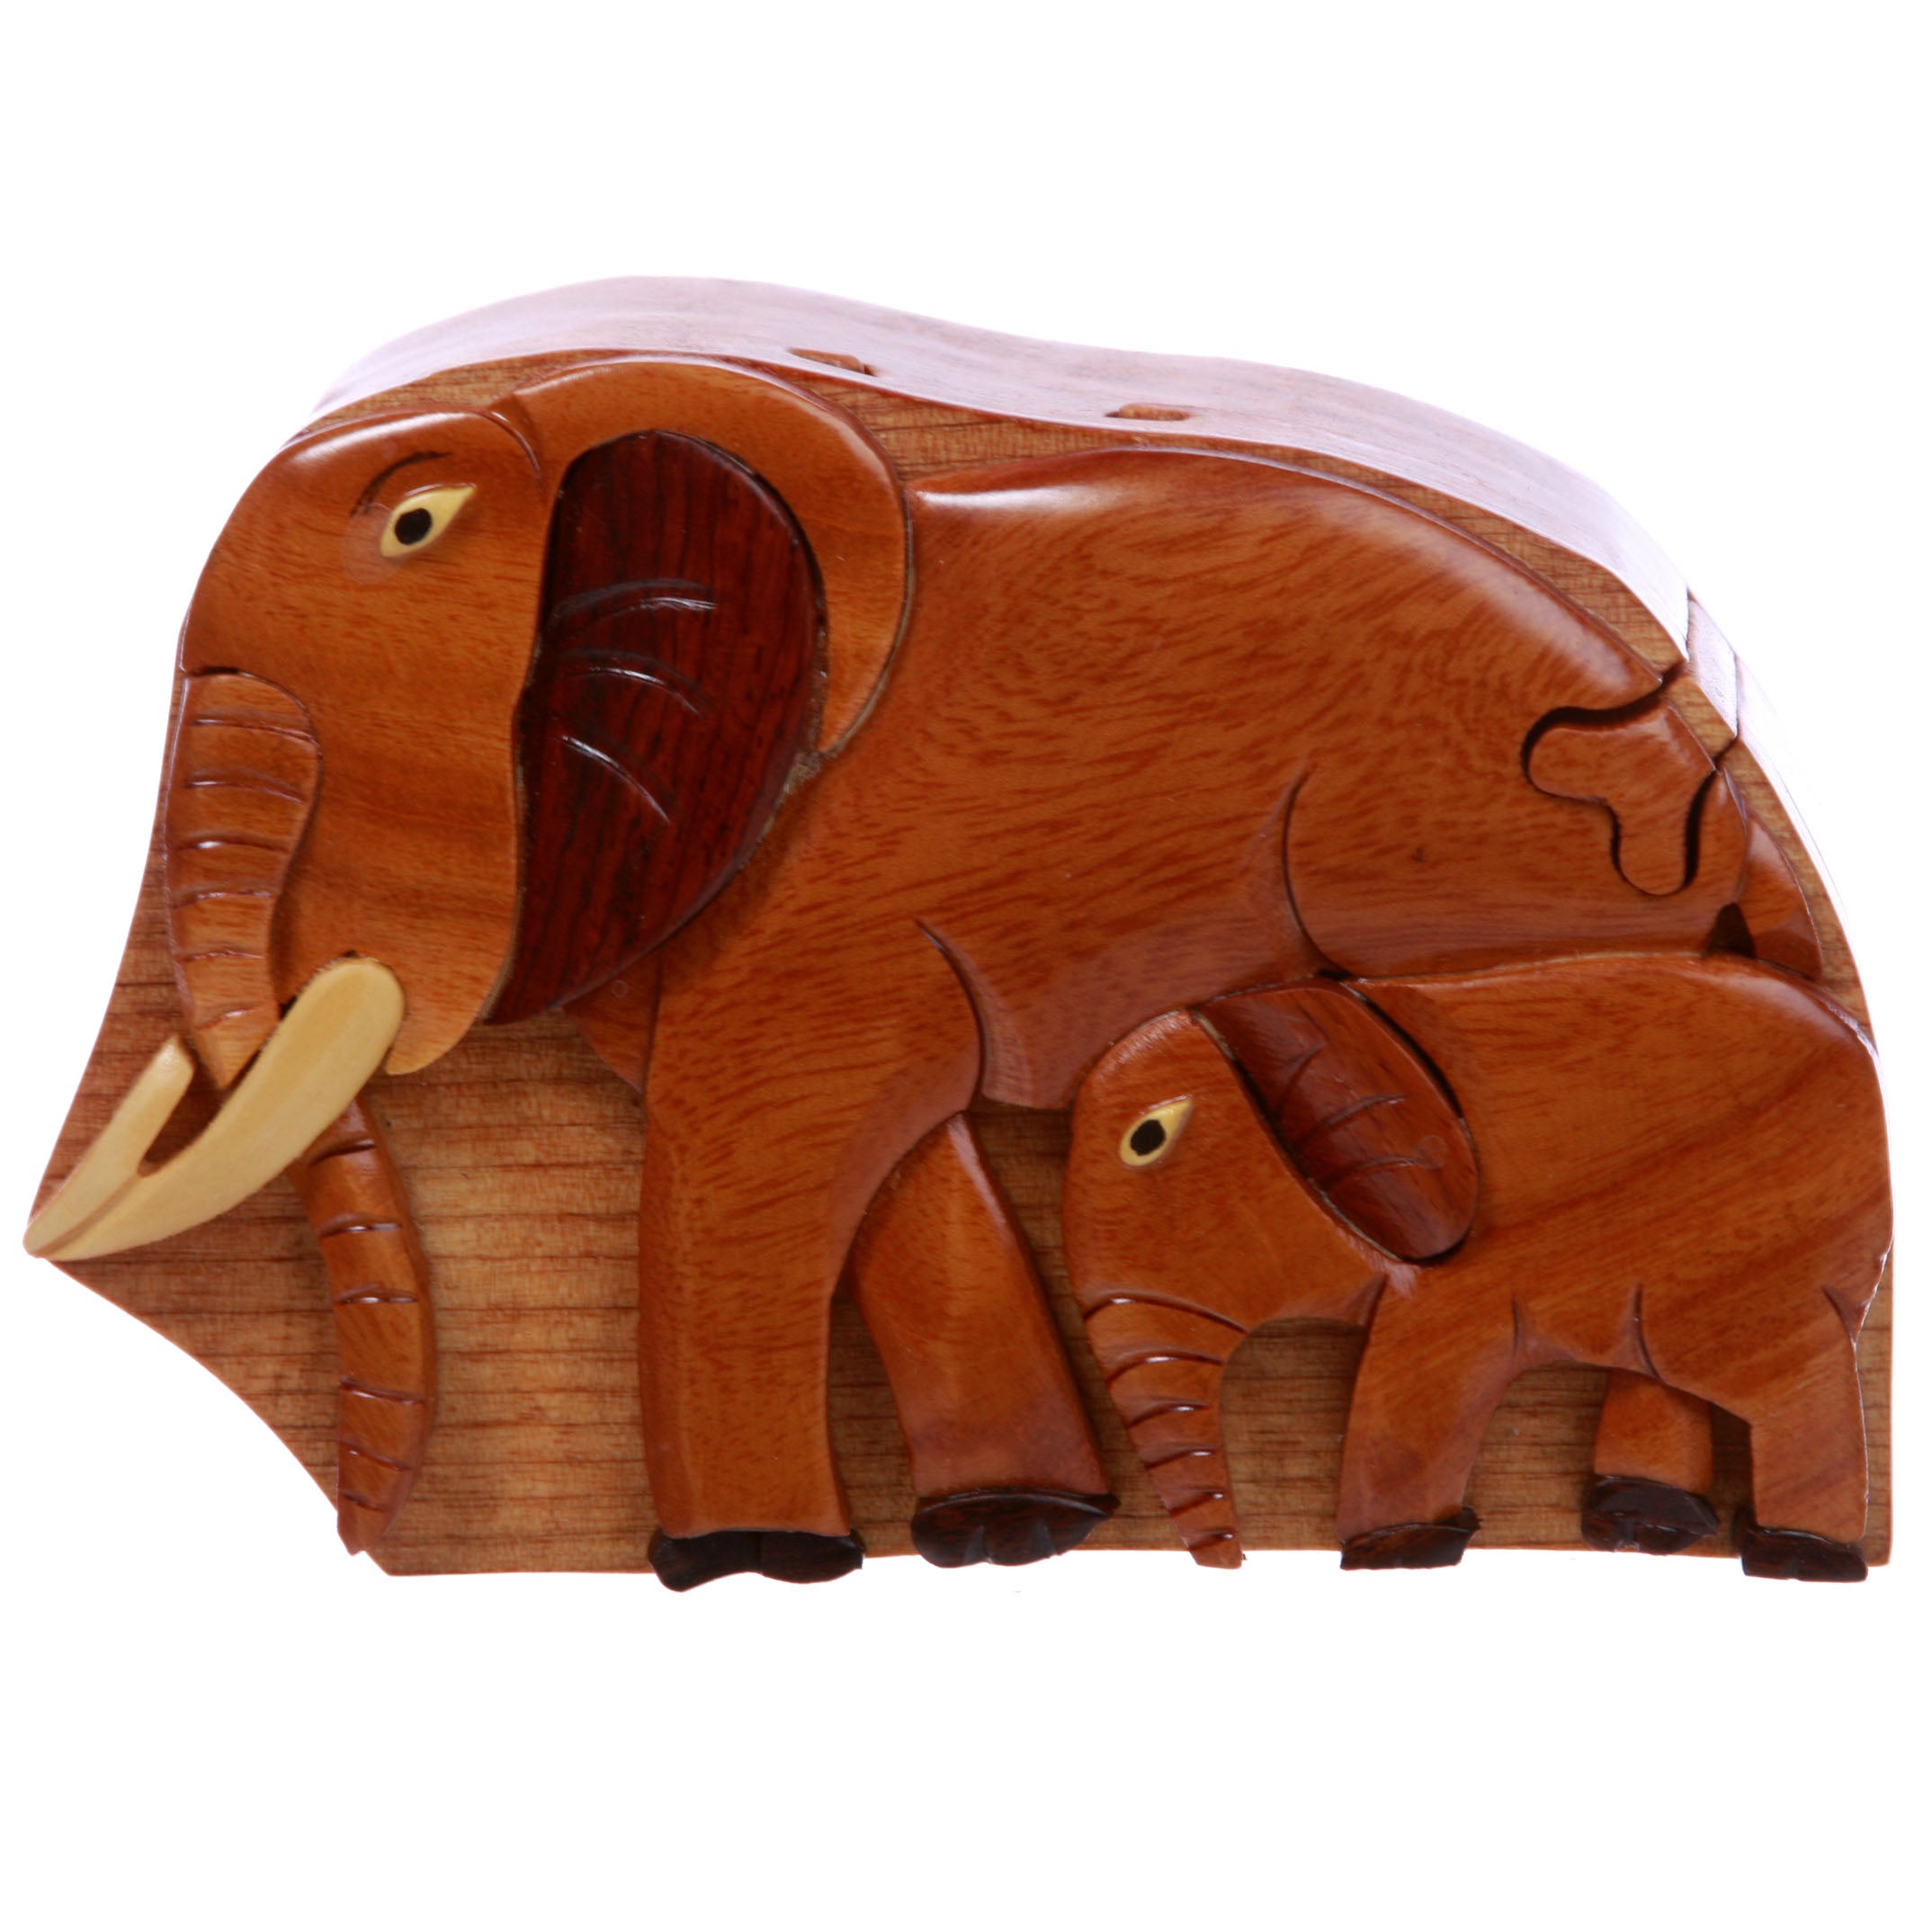 Handcrafted Wooden Animal Shape Secret Jewelry Puzzle Box - Elephants